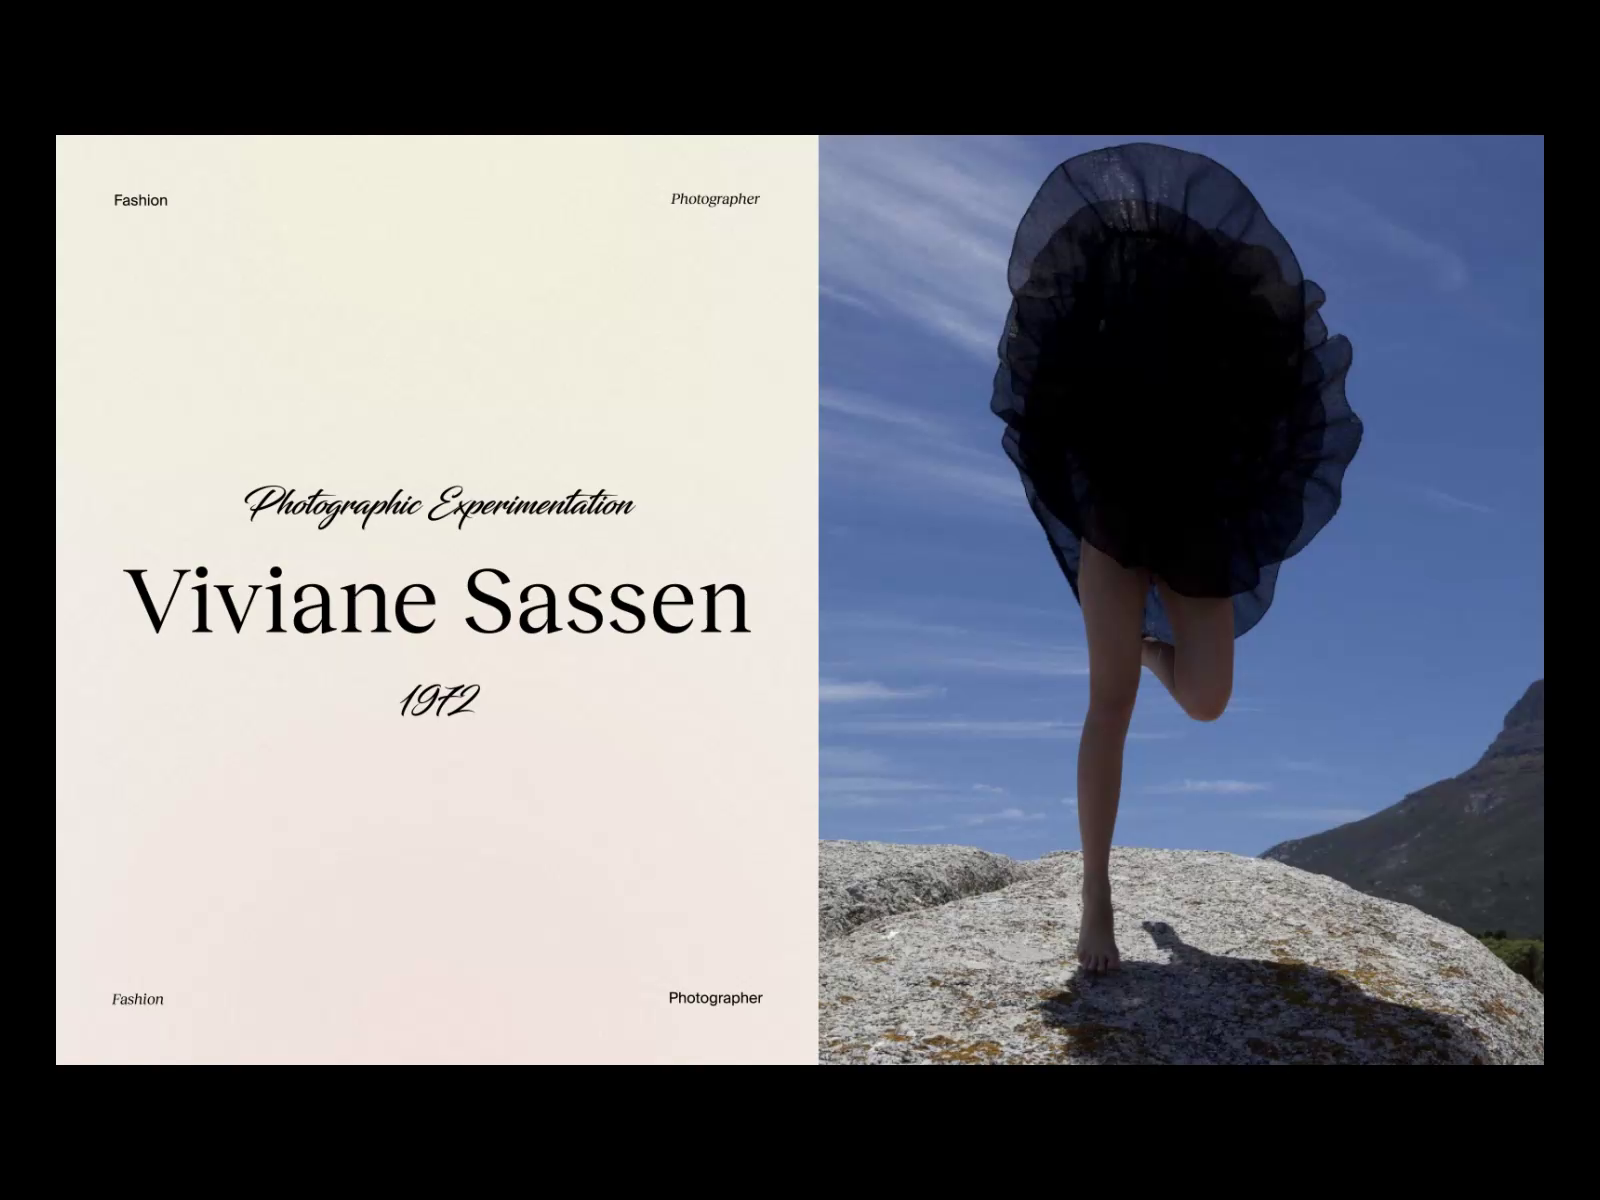 In the Shadow of Viviane Sassen